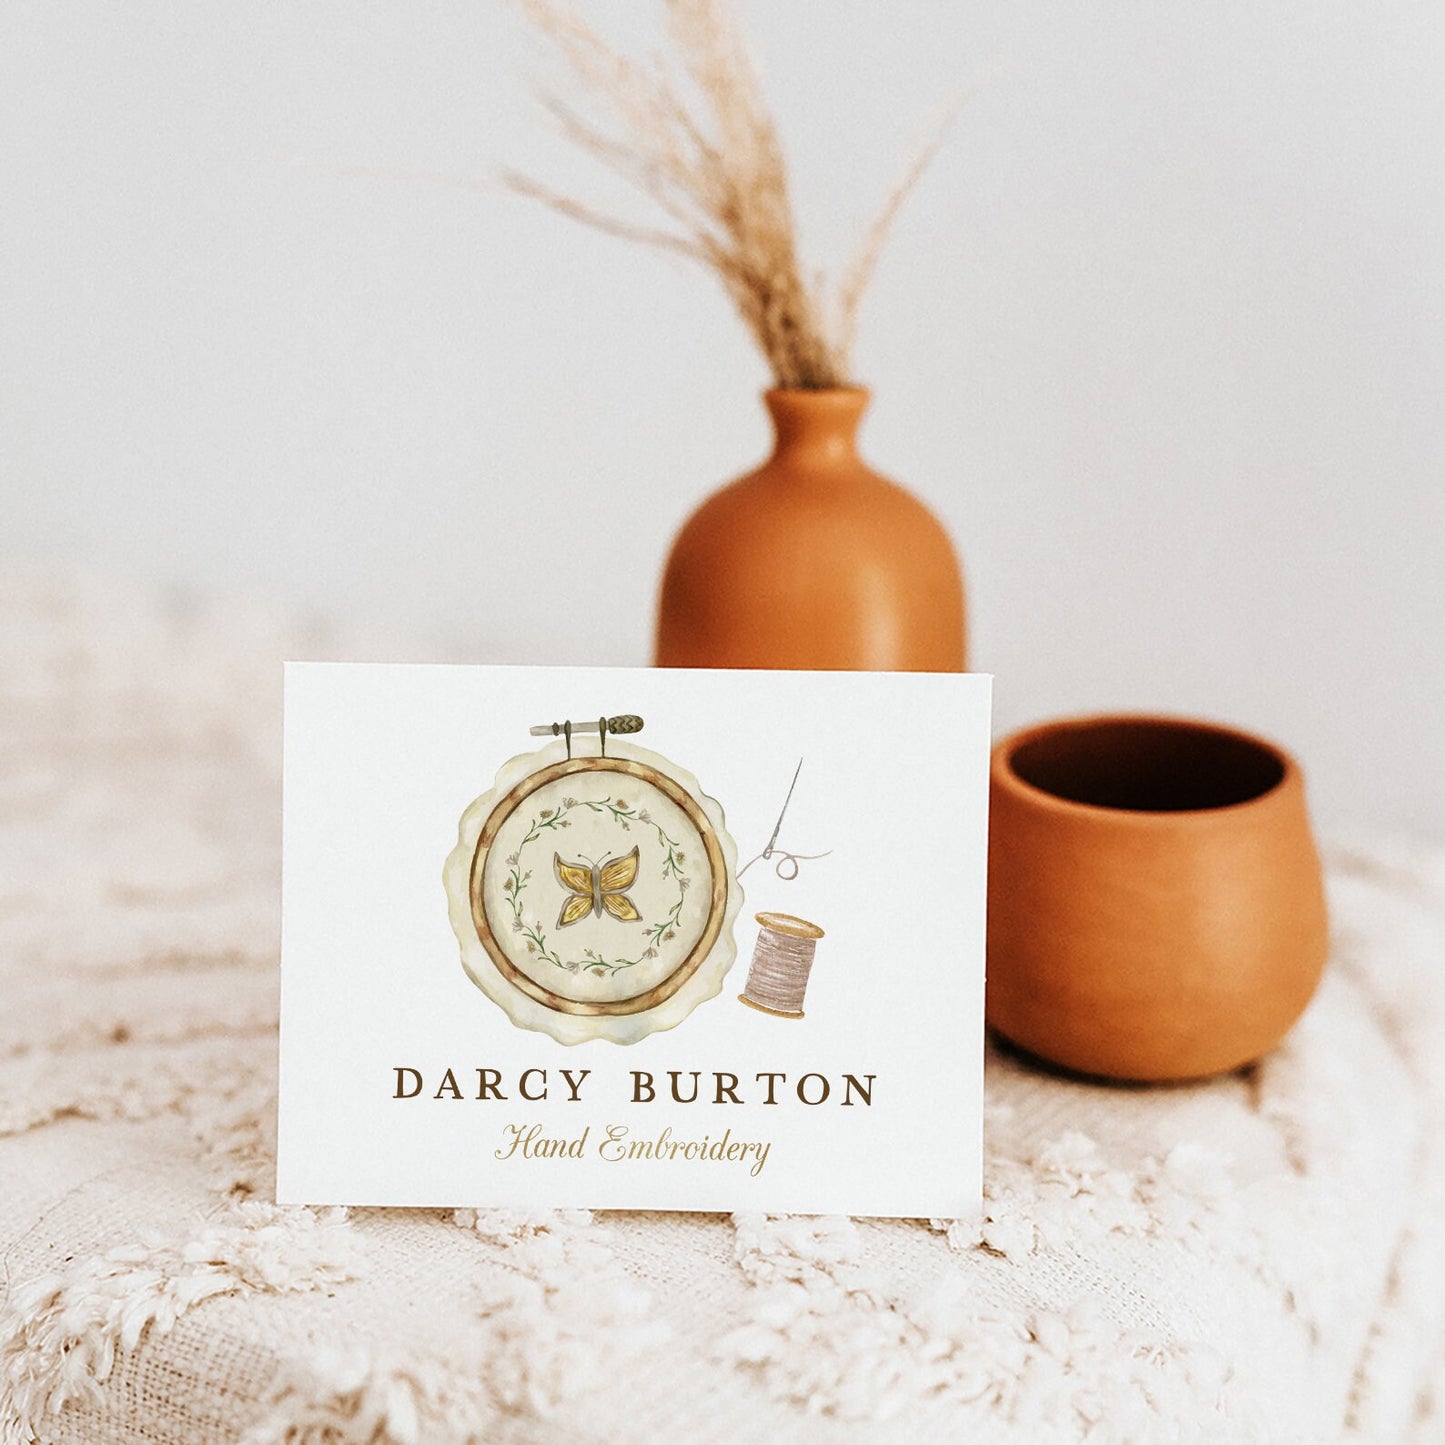 Darcy Burton | Premade Logo Design | Embroidery Hoop, Sewing, Thread